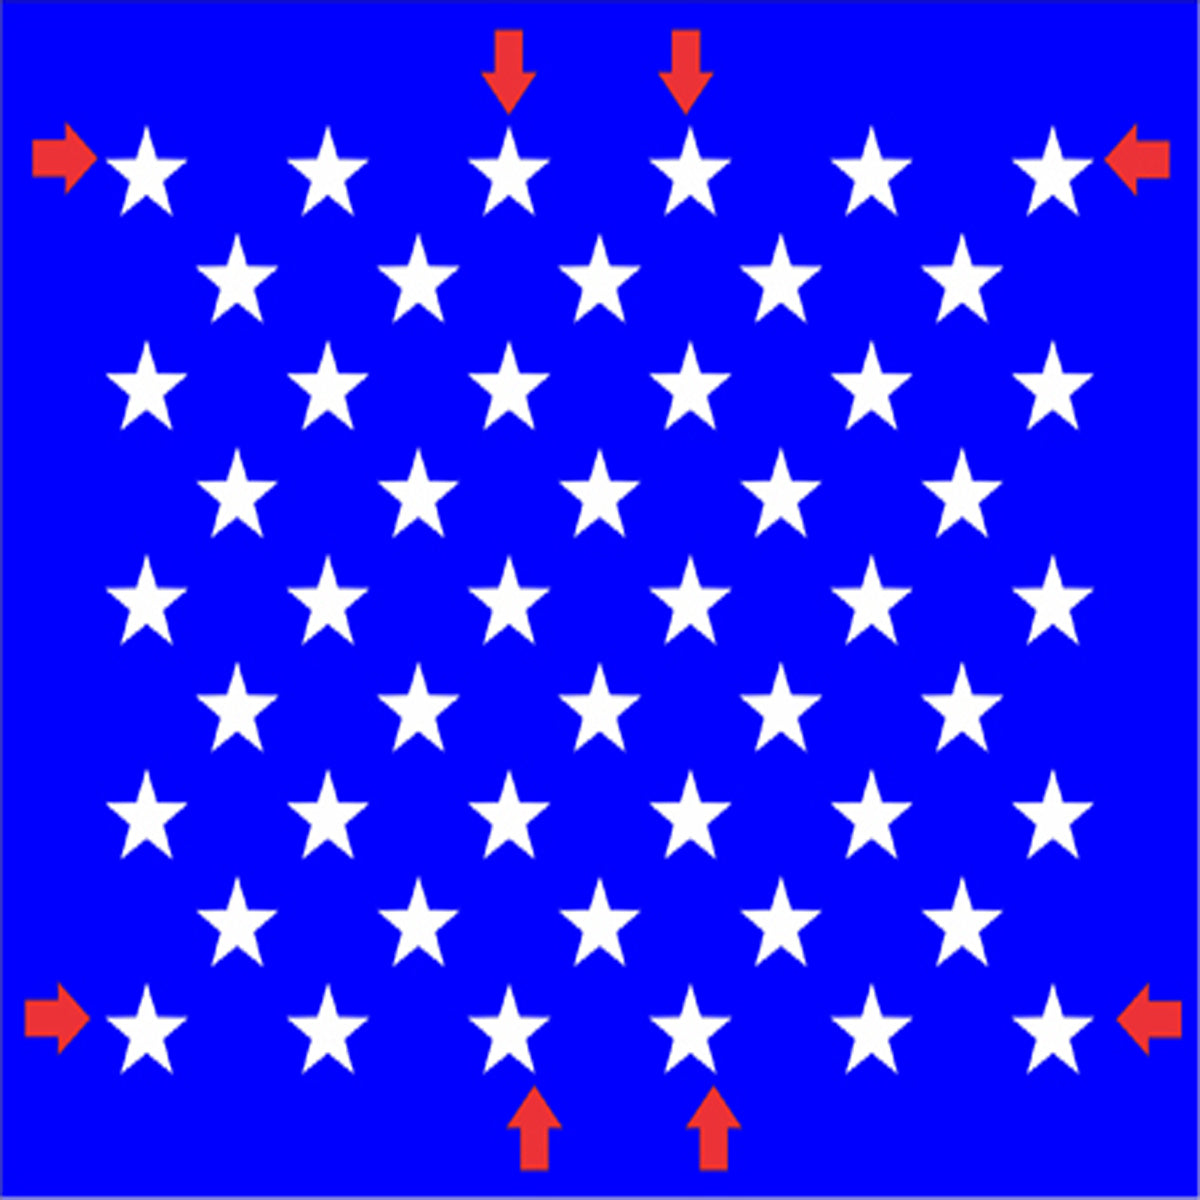  Stencil Steel 50 Star American Flag Stencil Template 3